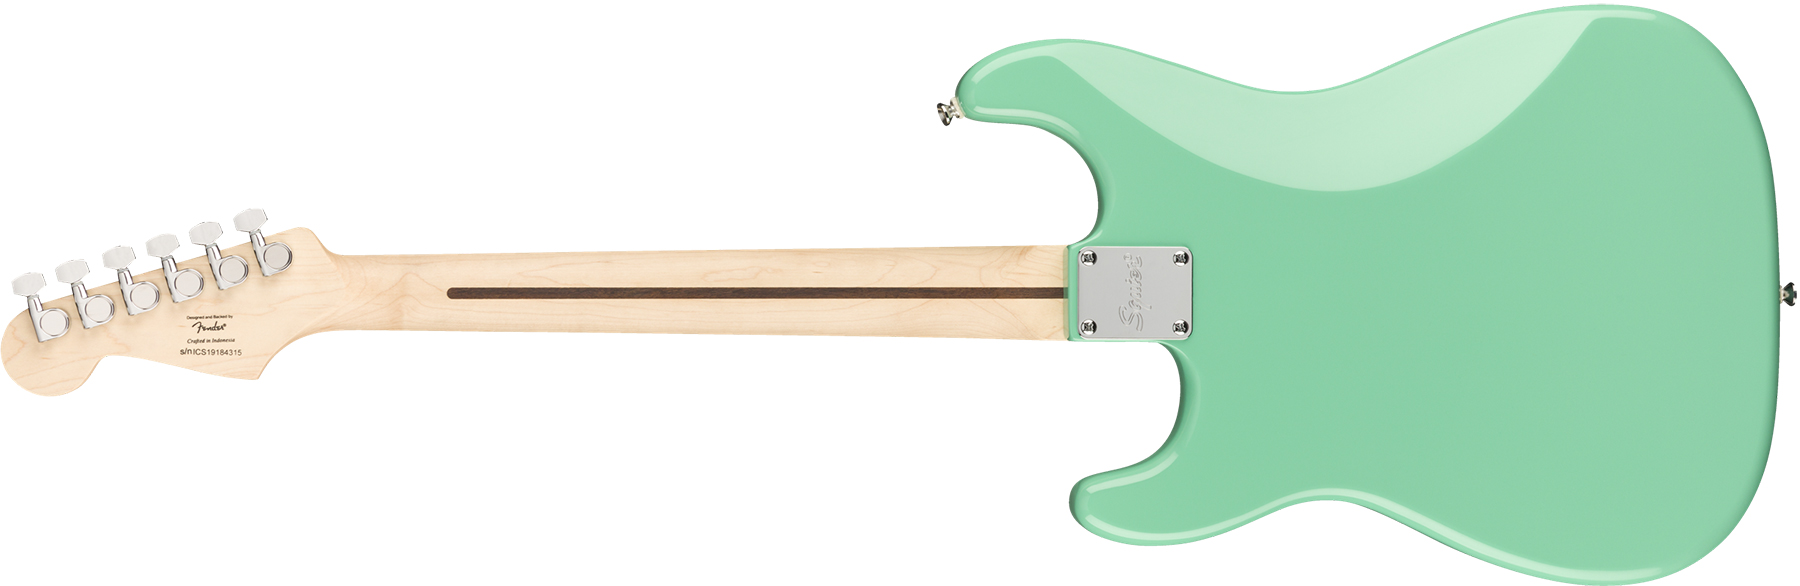 Squier Strat Bullet Fsr Ltd Hss Ht Lau - Sea Foam Green - Str shape electric guitar - Variation 1